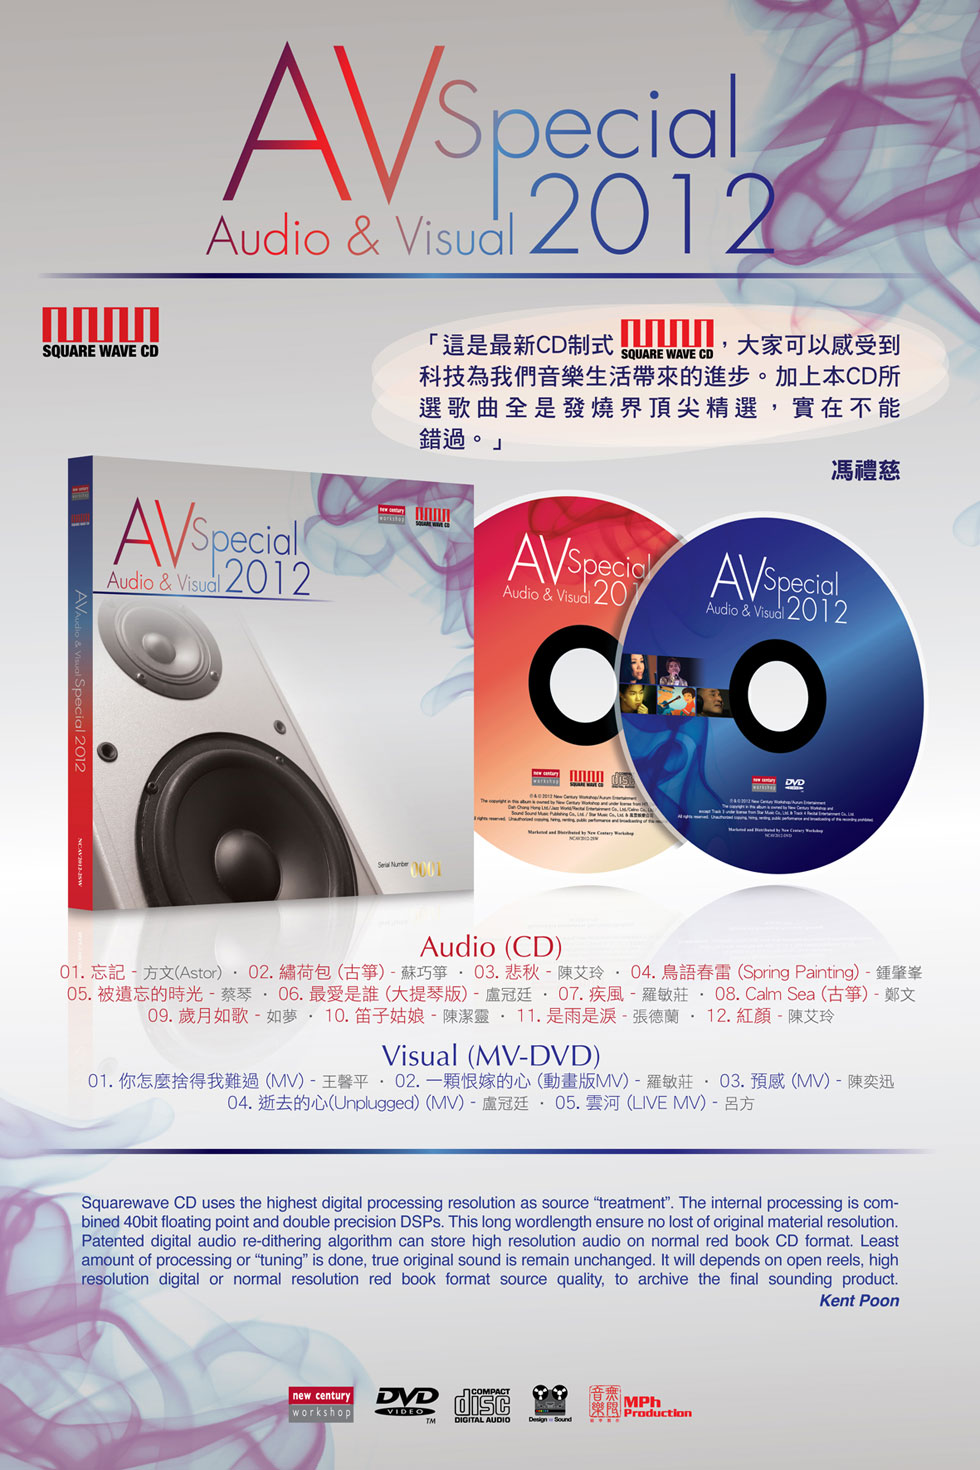 AV Special 2012 CD + DVD Square Wave CD